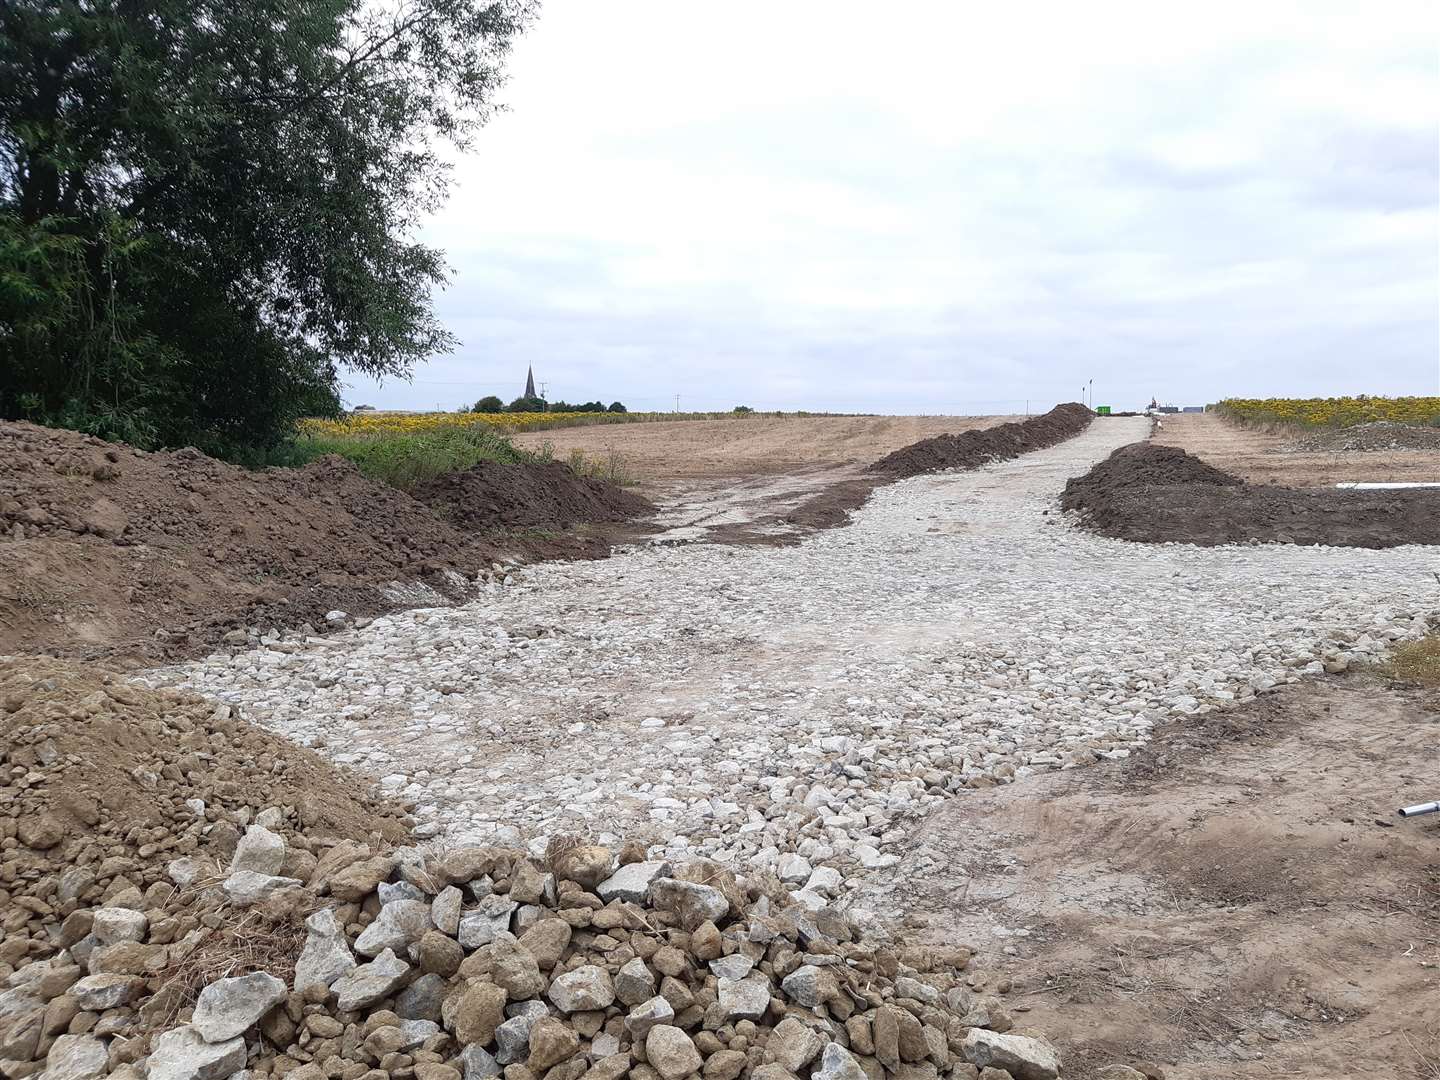 Work on the site in Sevington started last Thursday